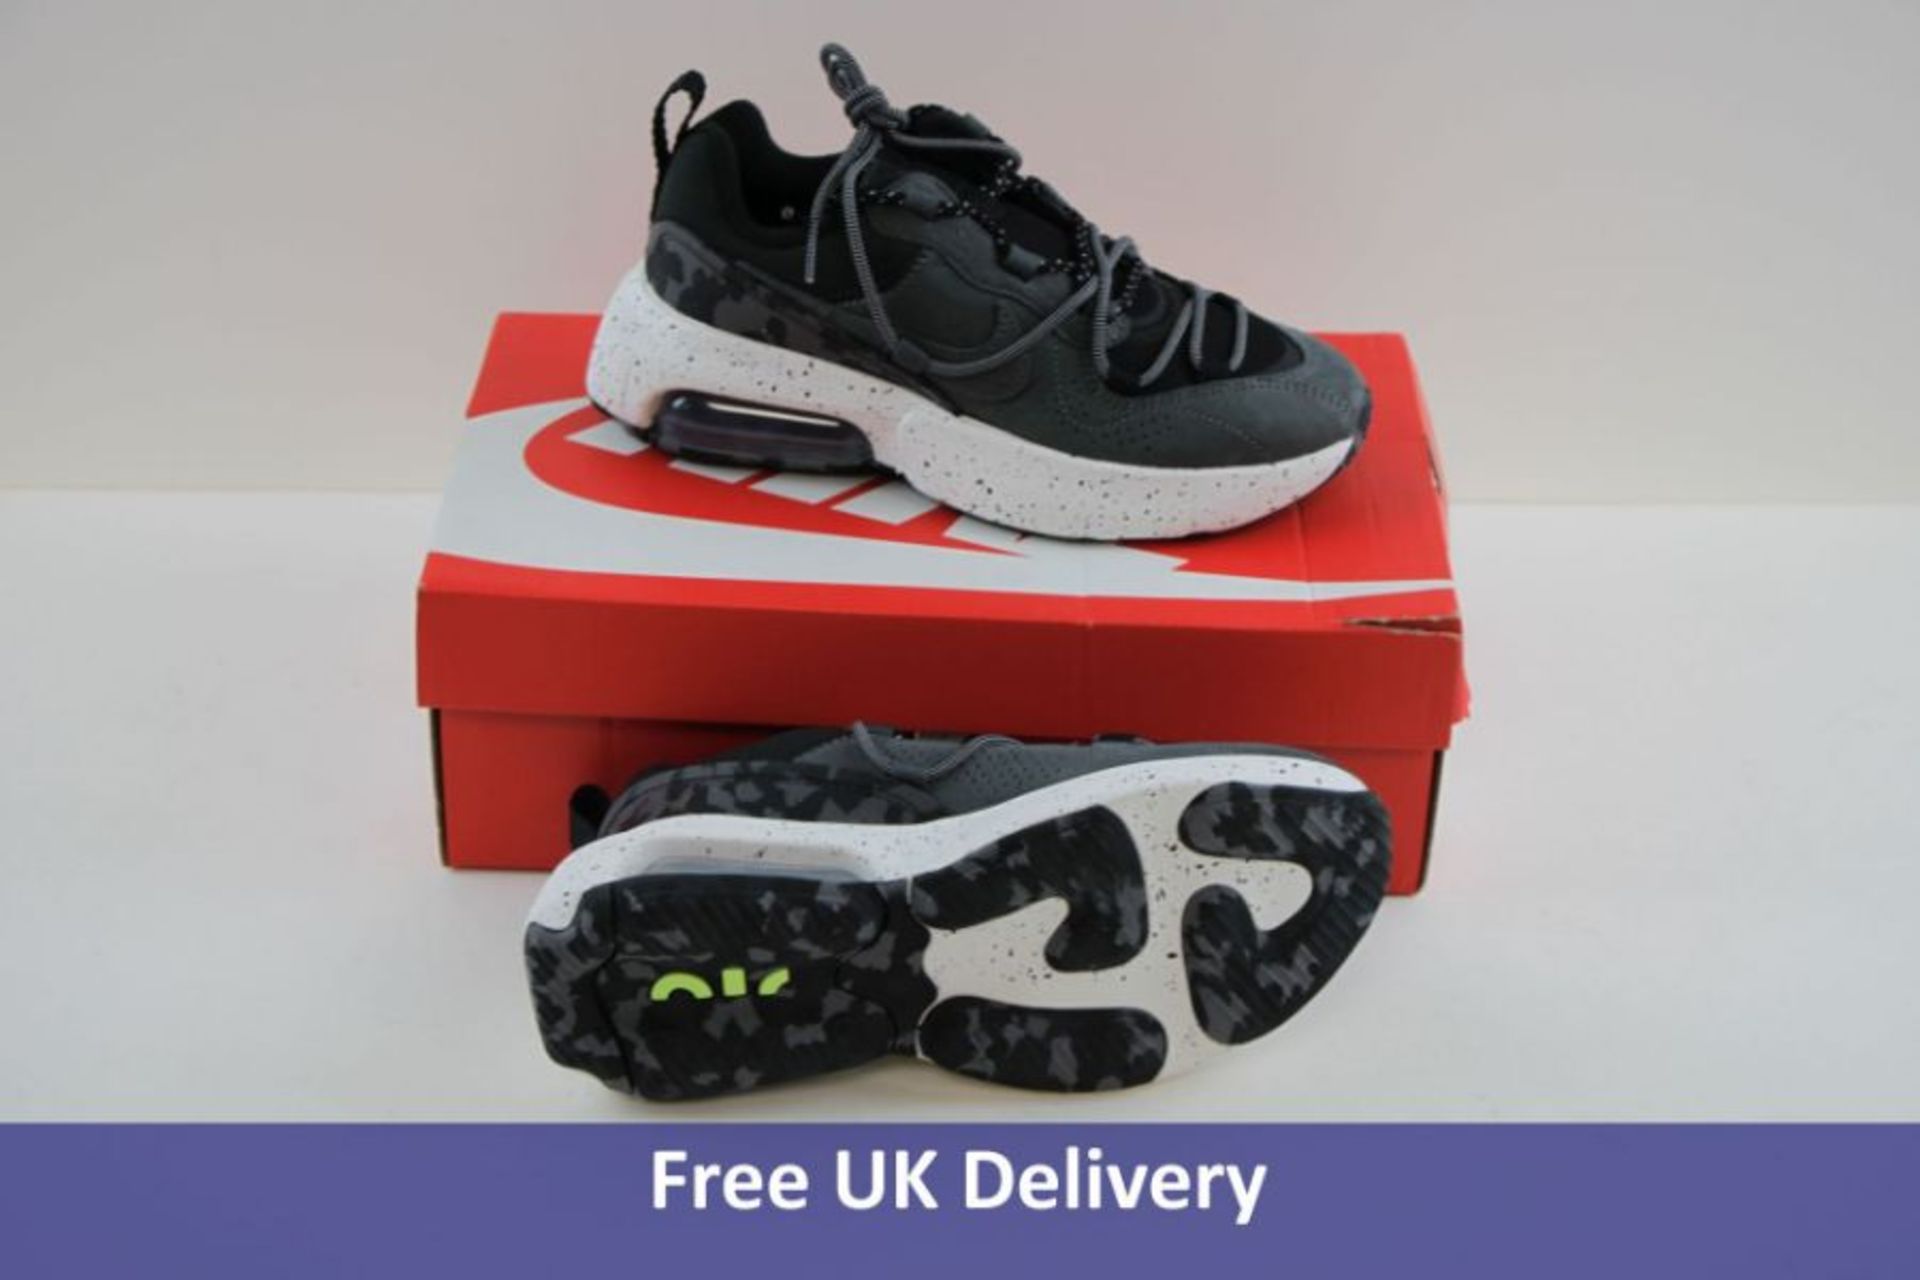 Nike Air Max Children's Trainers, Black Iron Grey and Summit White, UK 3.5